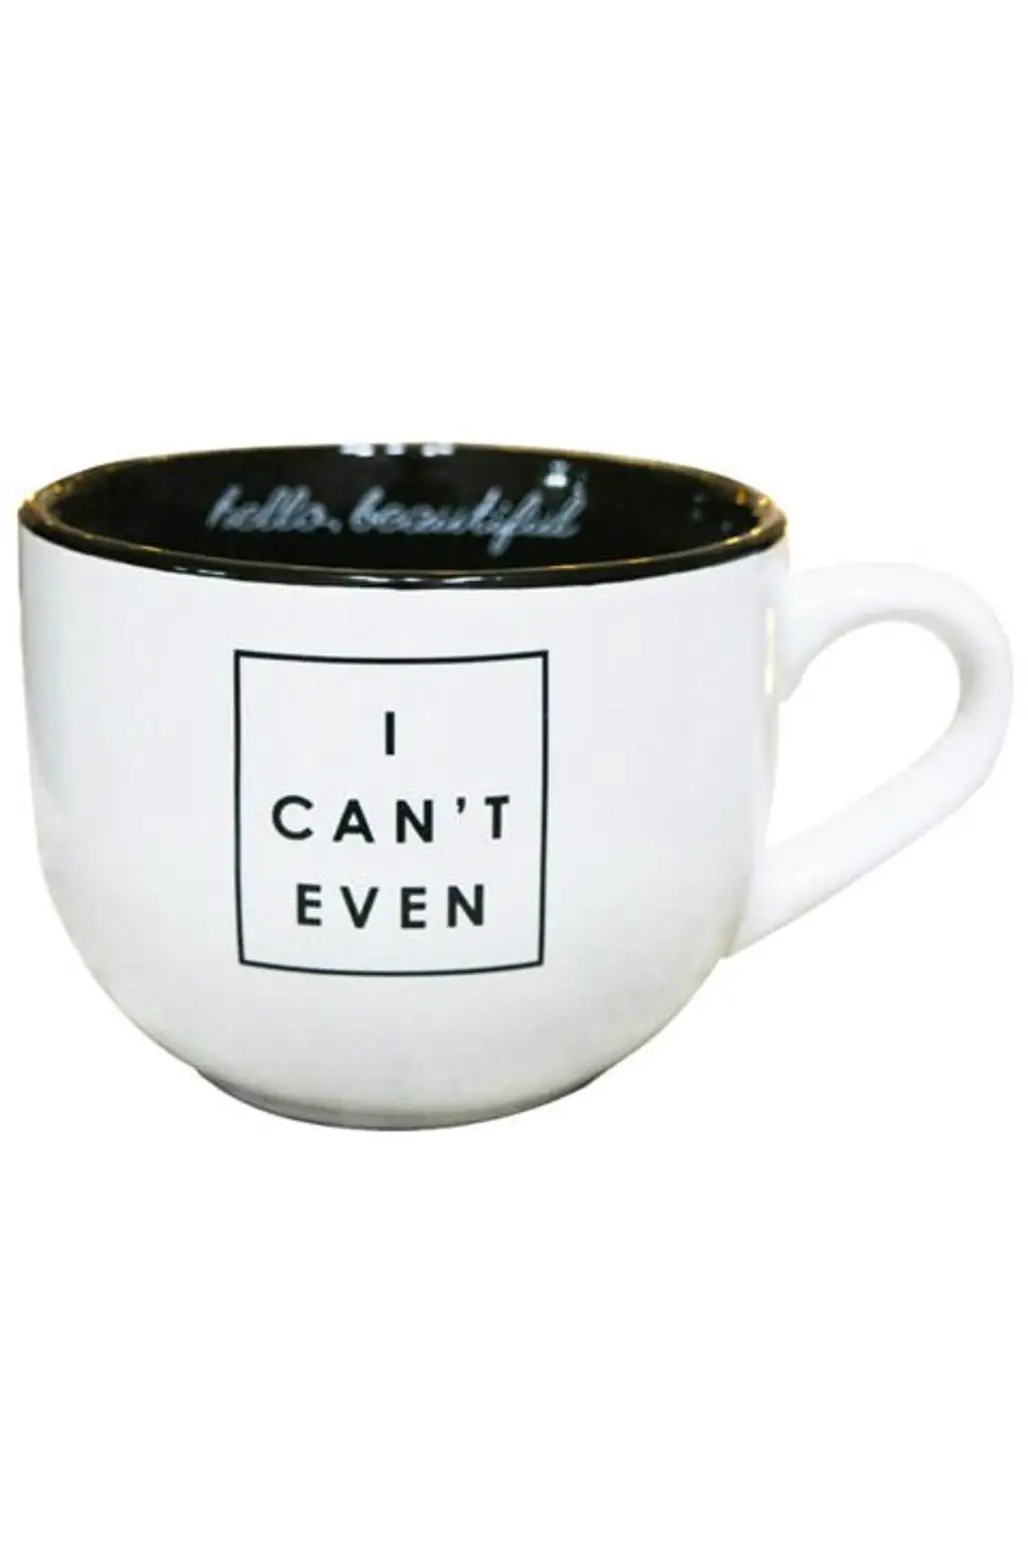 mug, cup, coffee cup, caffeine, espresso,